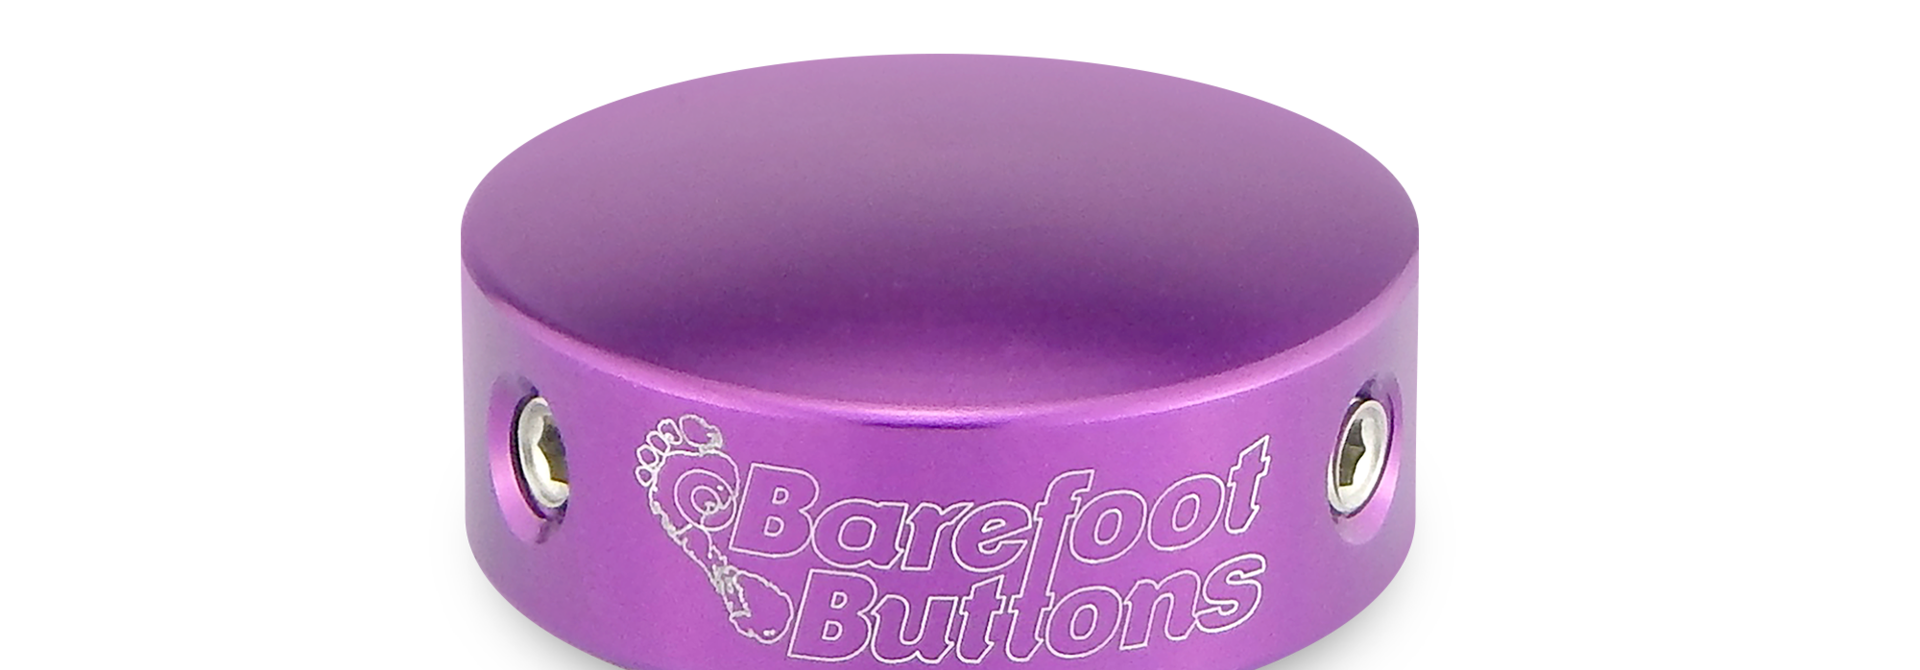 Barefoot Buttons - Standard V1